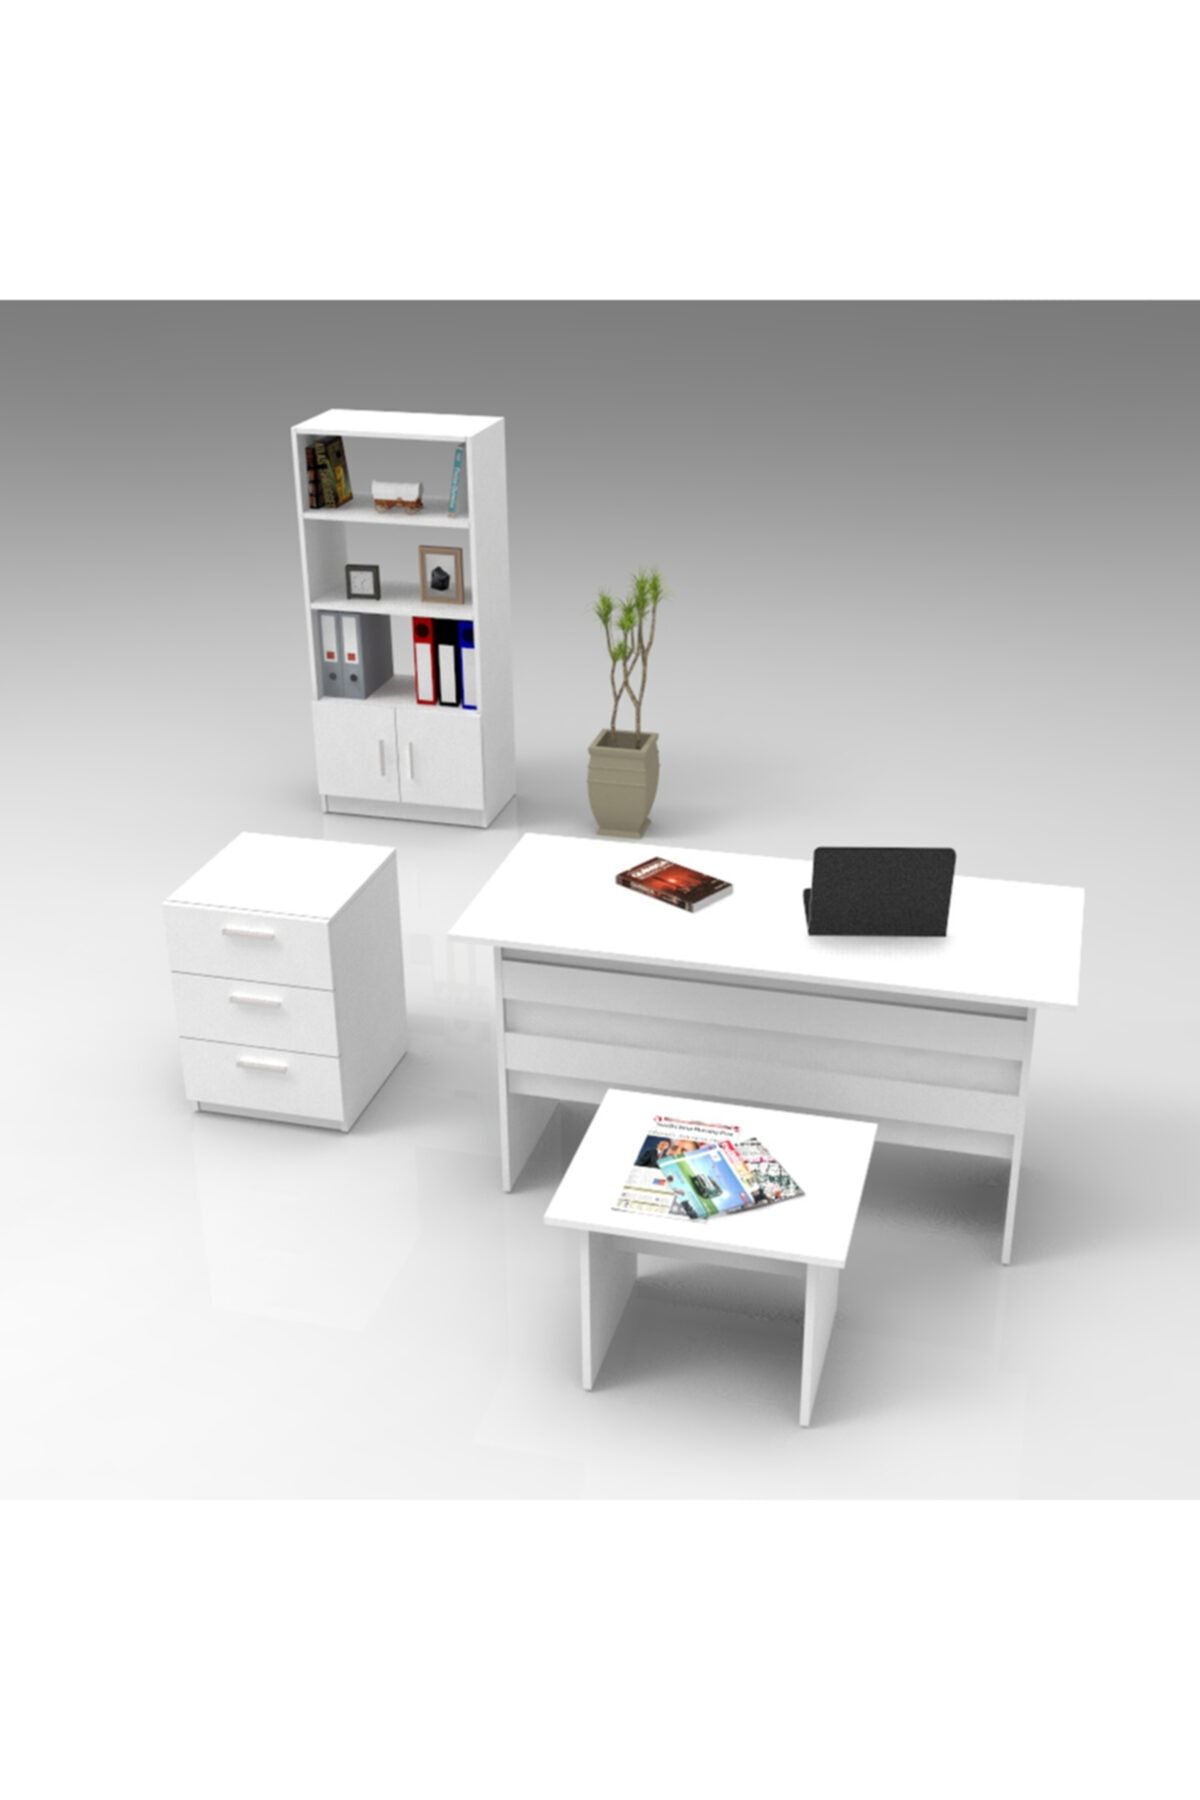 L'occi Concept Diego Abcd Ofis Masa Sehpa Keson Kitaplık 4'lü Büro Masa Takımı Beyaz